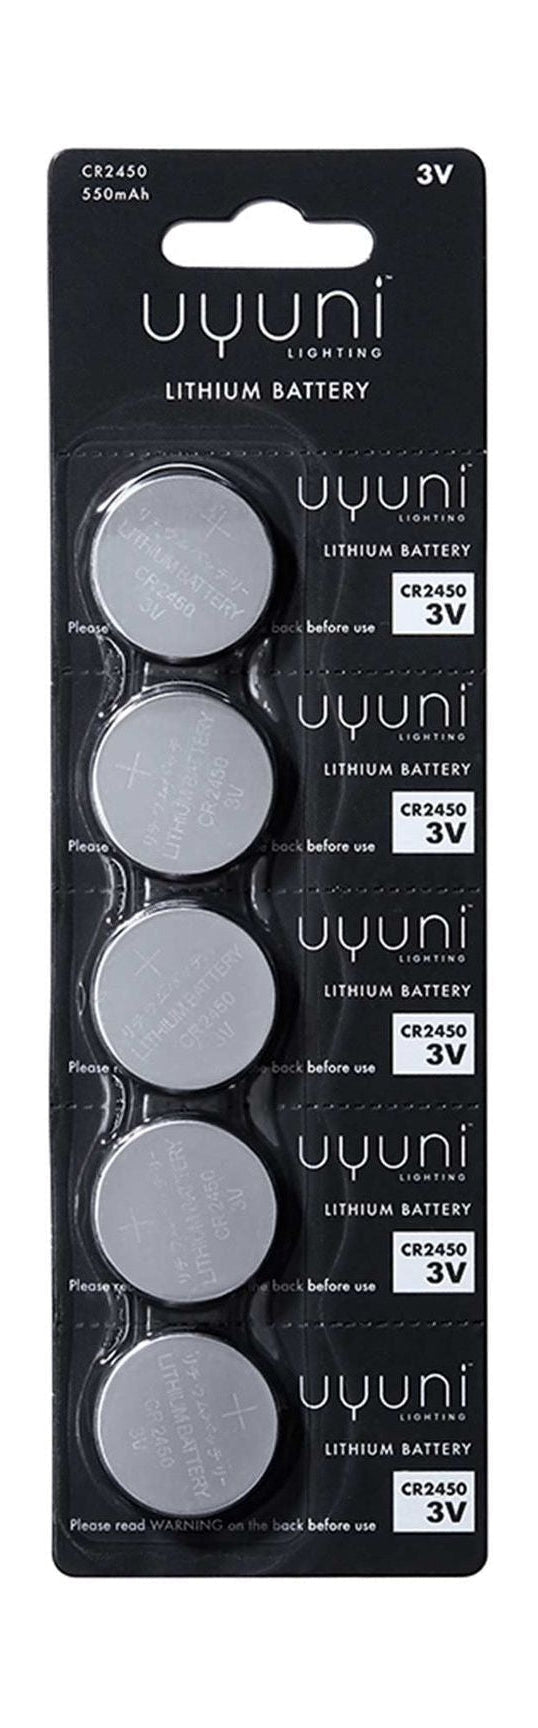 Uyuni Lighting CR2450 litiumbatterier 5 Pak